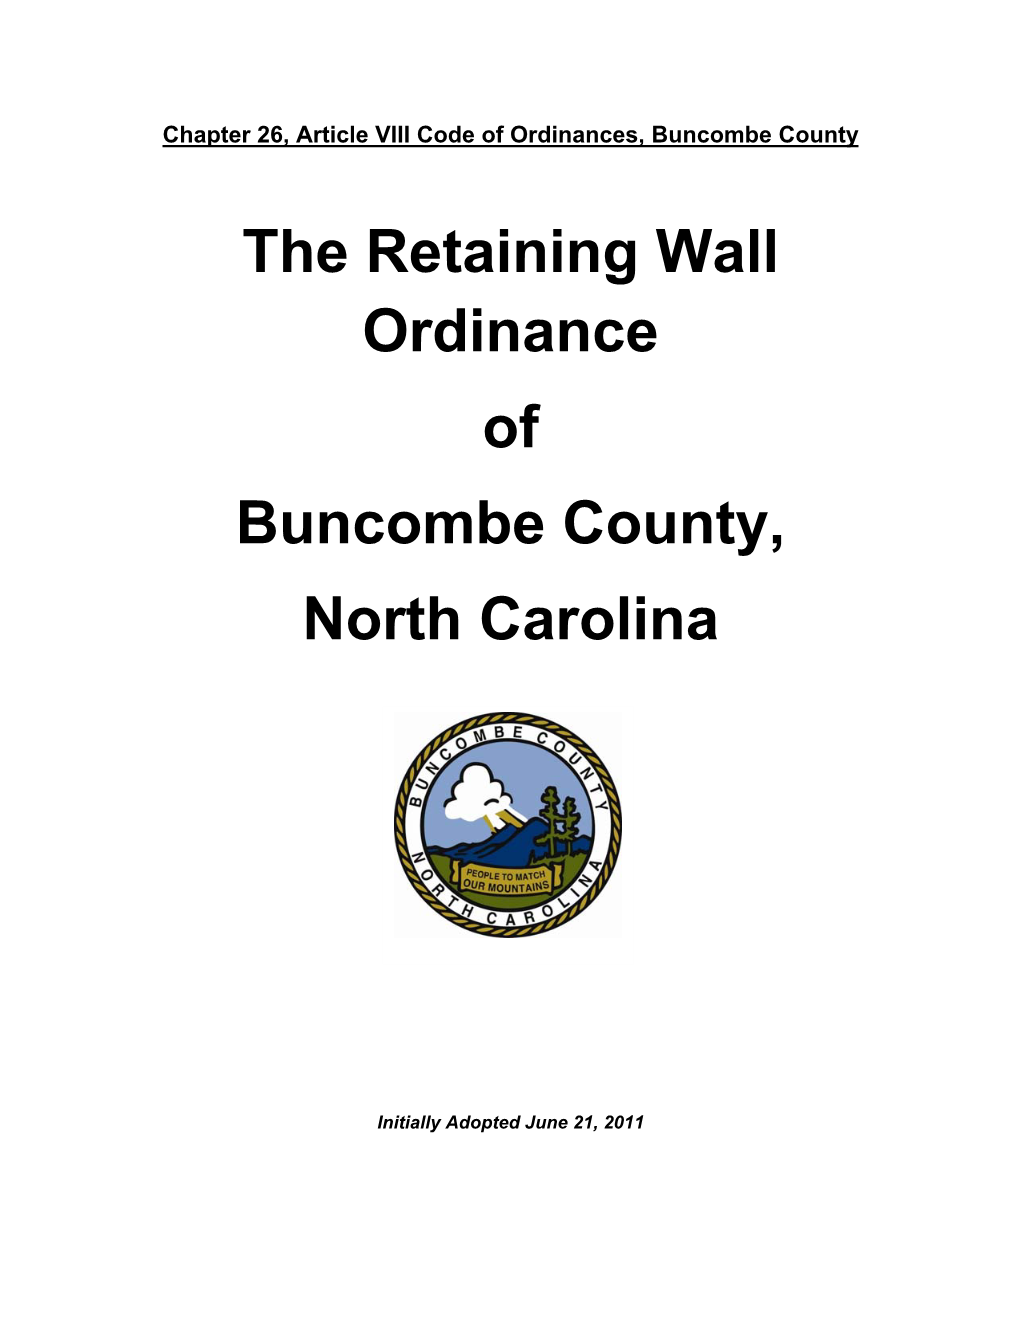 The Retaining Wall Ordinance of Buncombe County, North Carolina